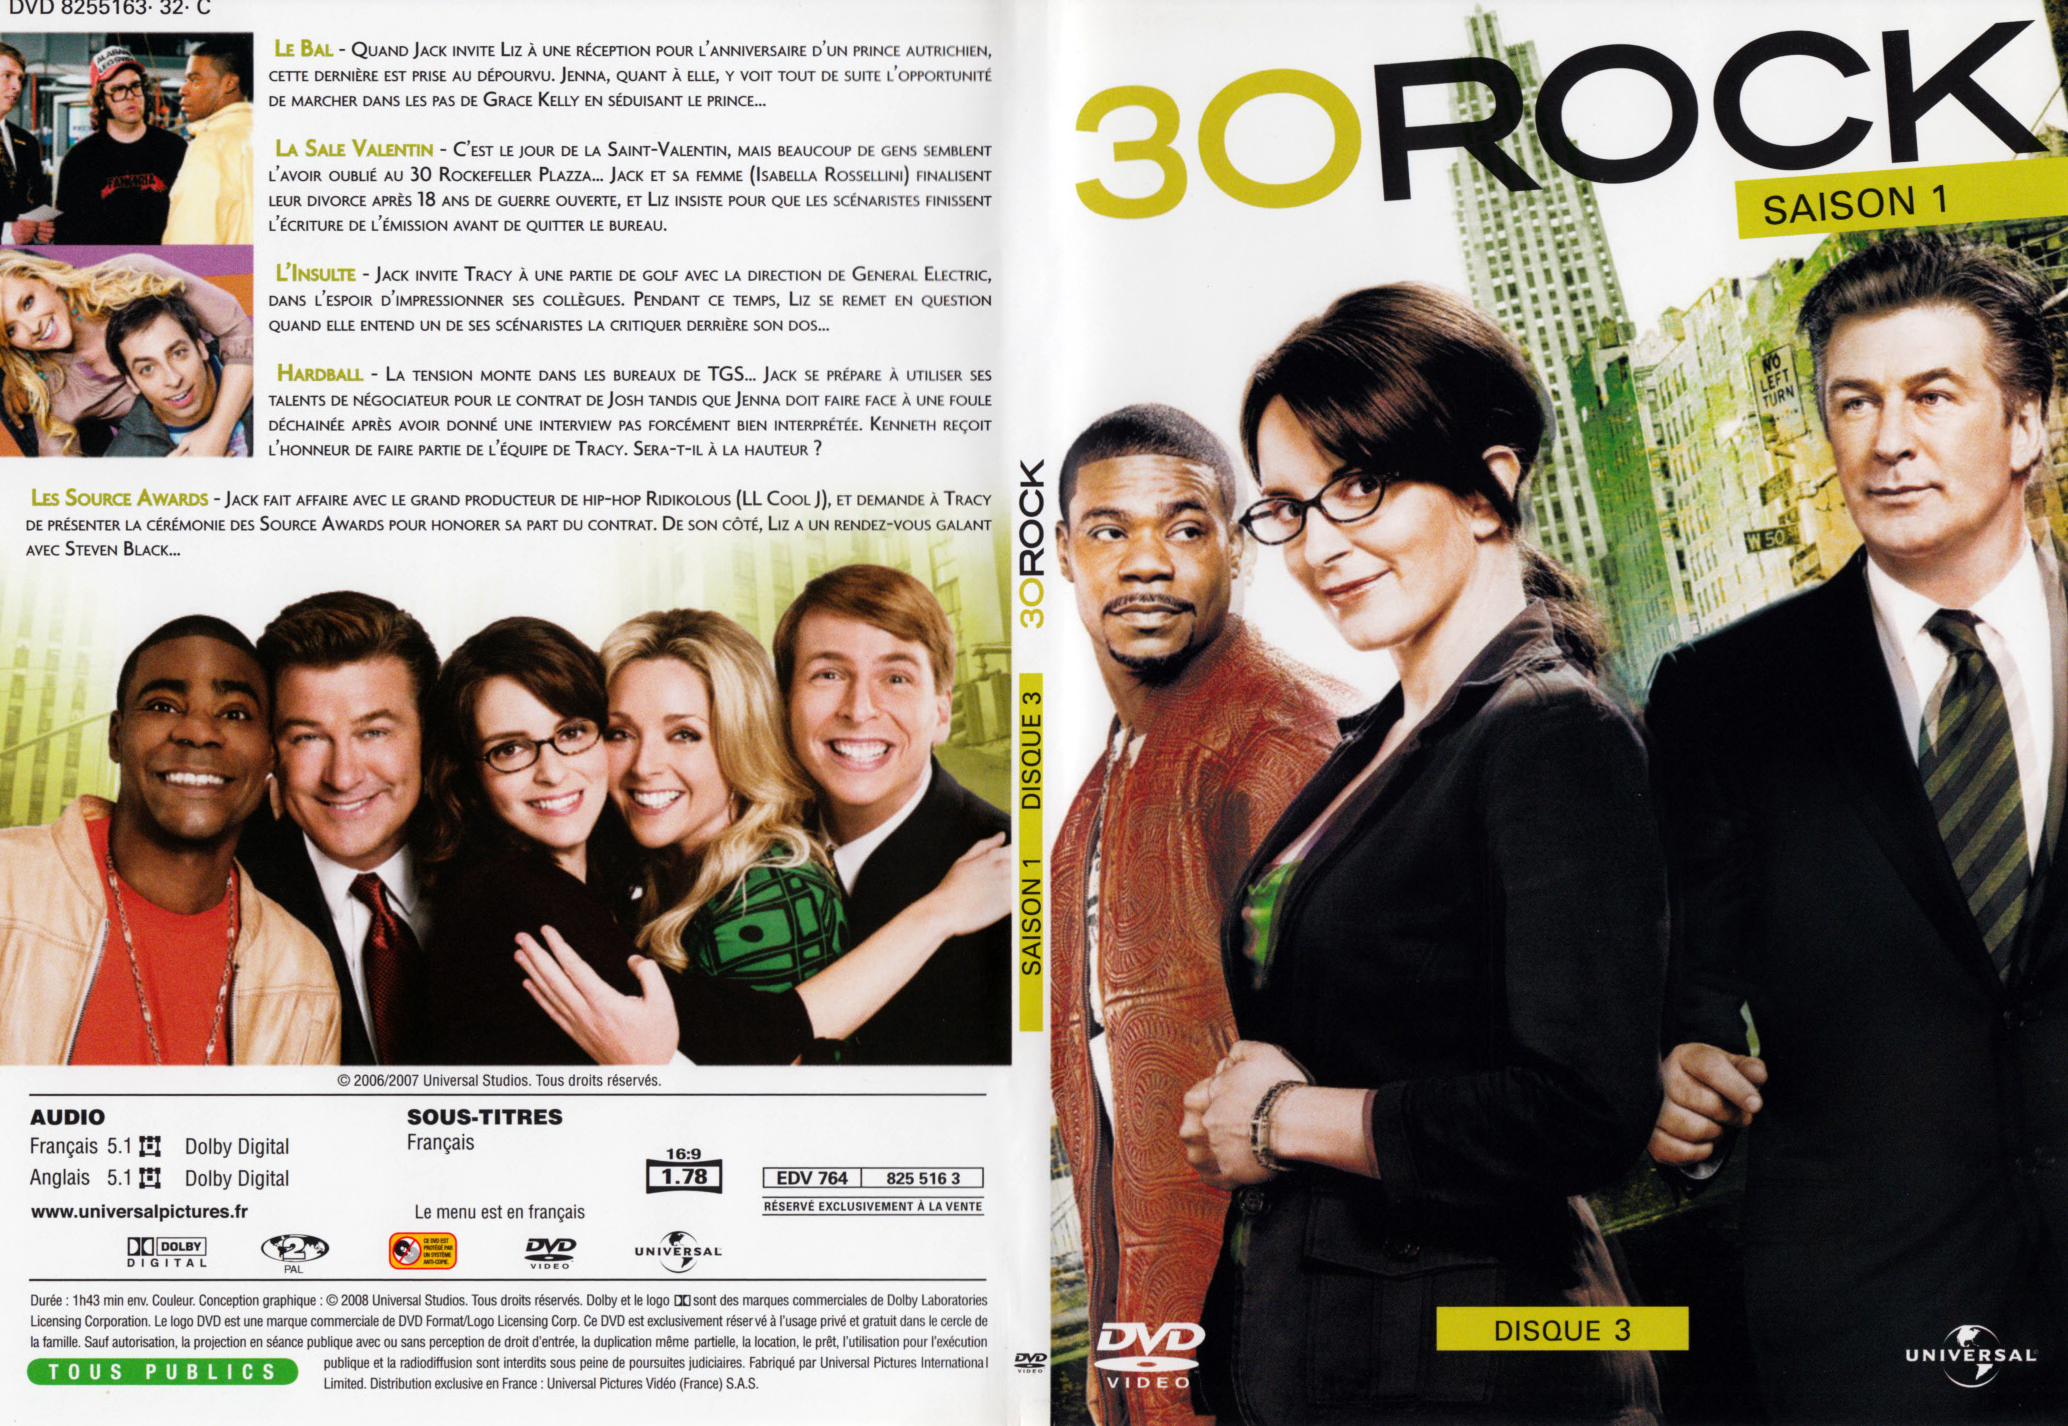 Jaquette DVD 30 Rock Saison 1 DVD 3